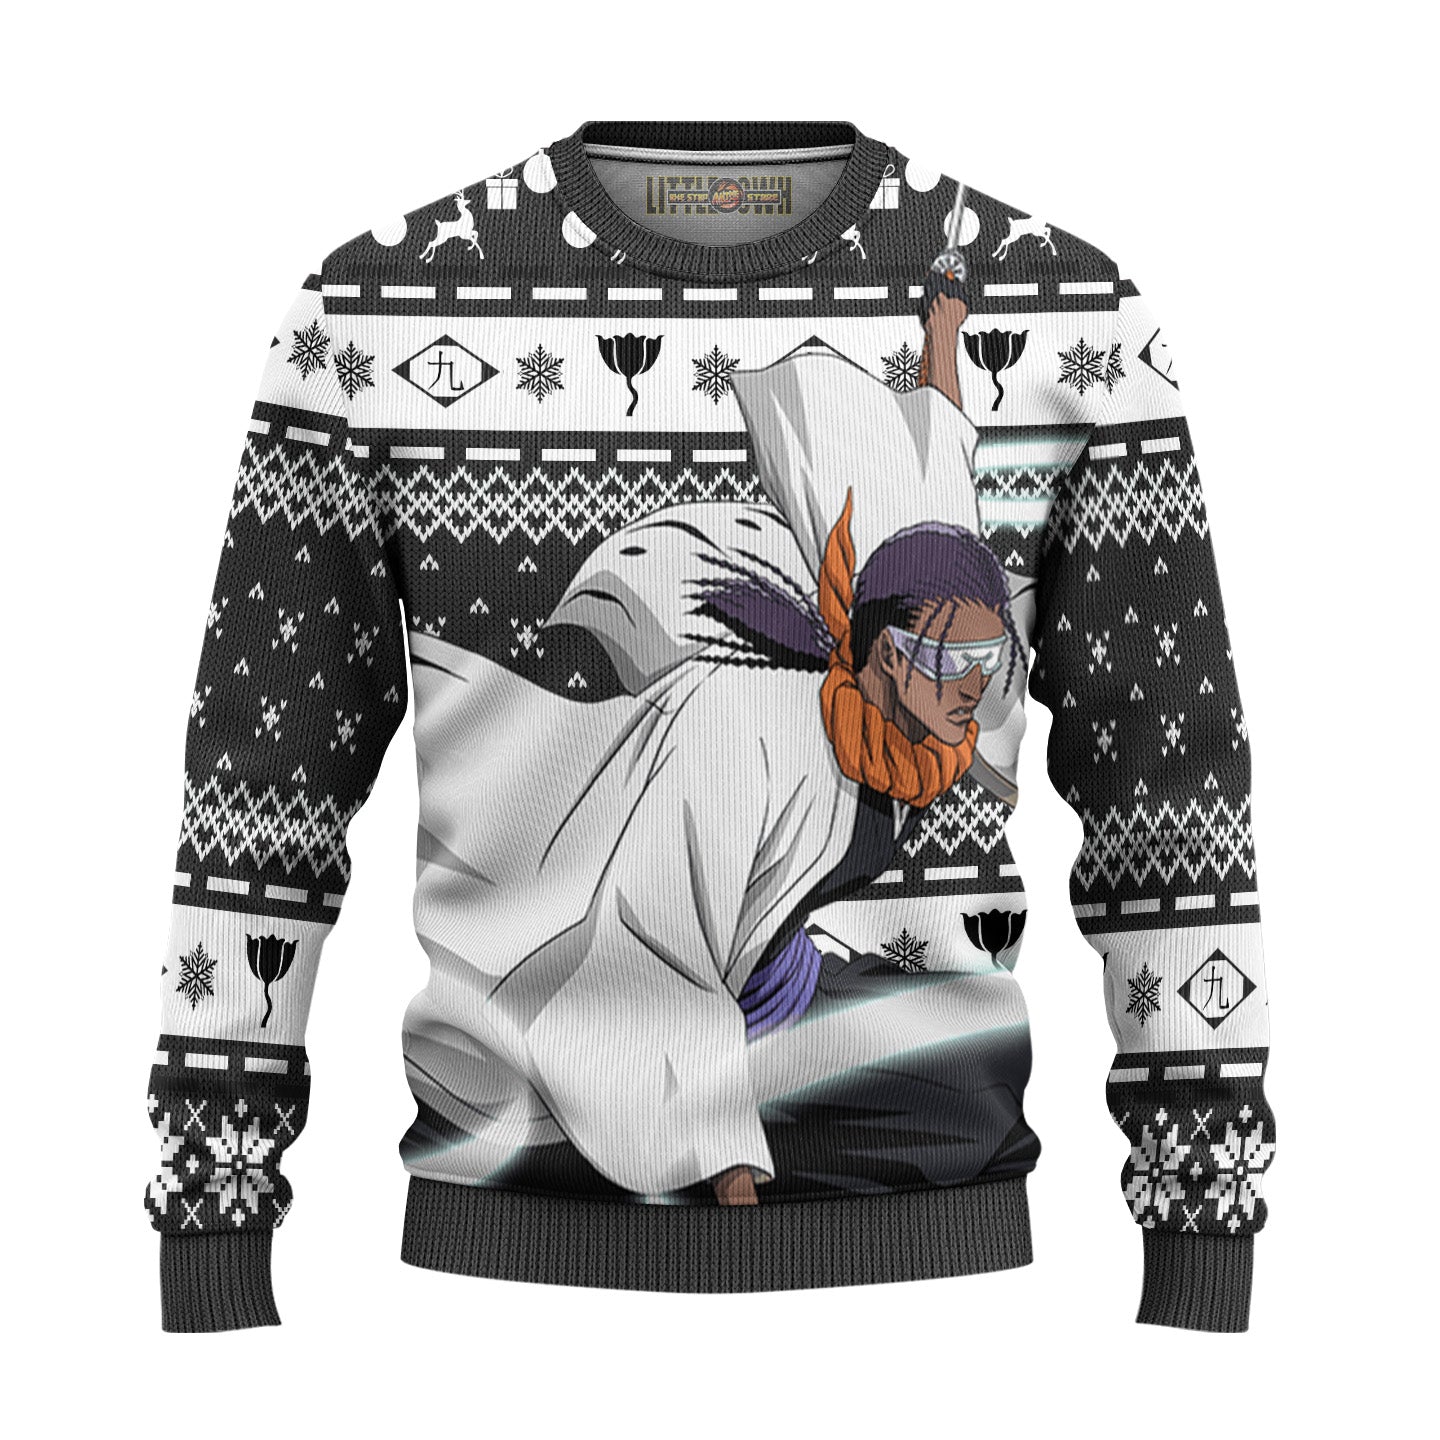 Toushirou Hitsugaya Ugly Christmas Sweater Custom Bleach Anime New Design